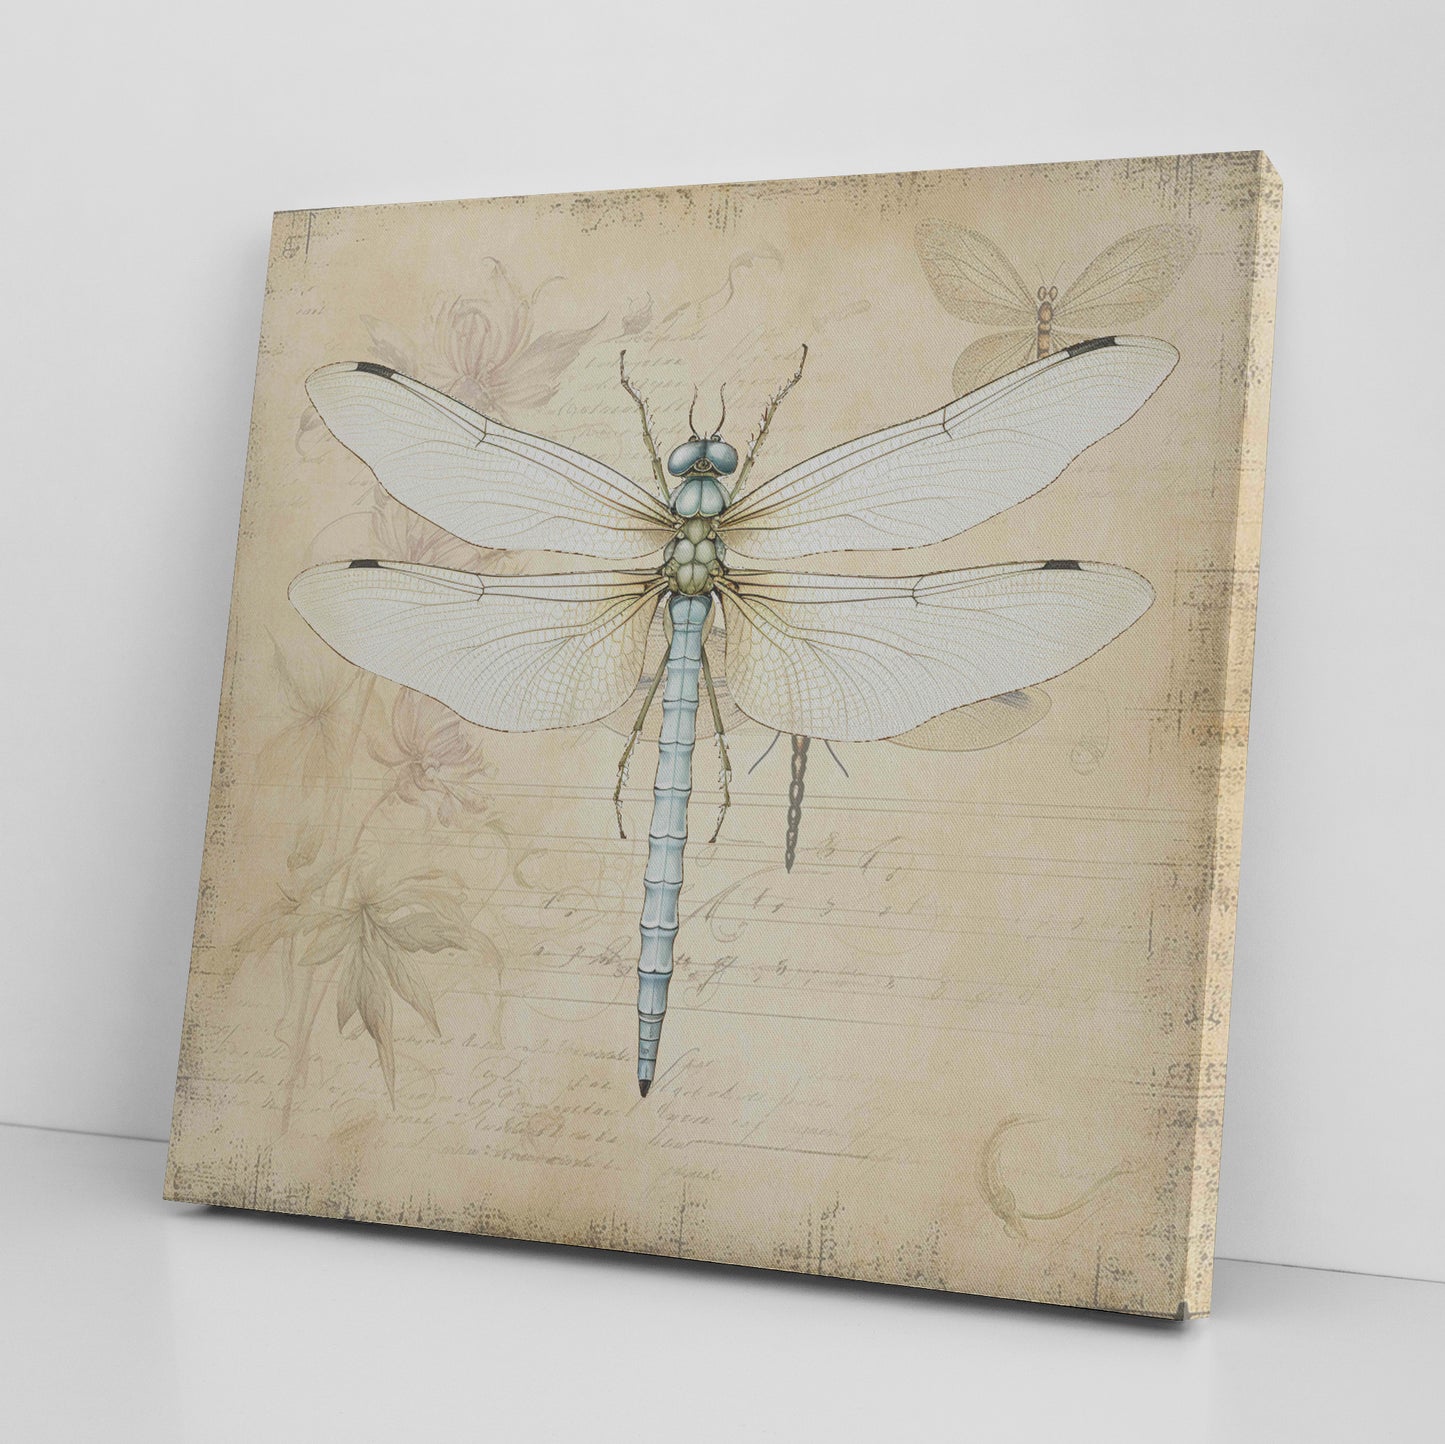 Vintage Dragonfly Canvas Art Print - White